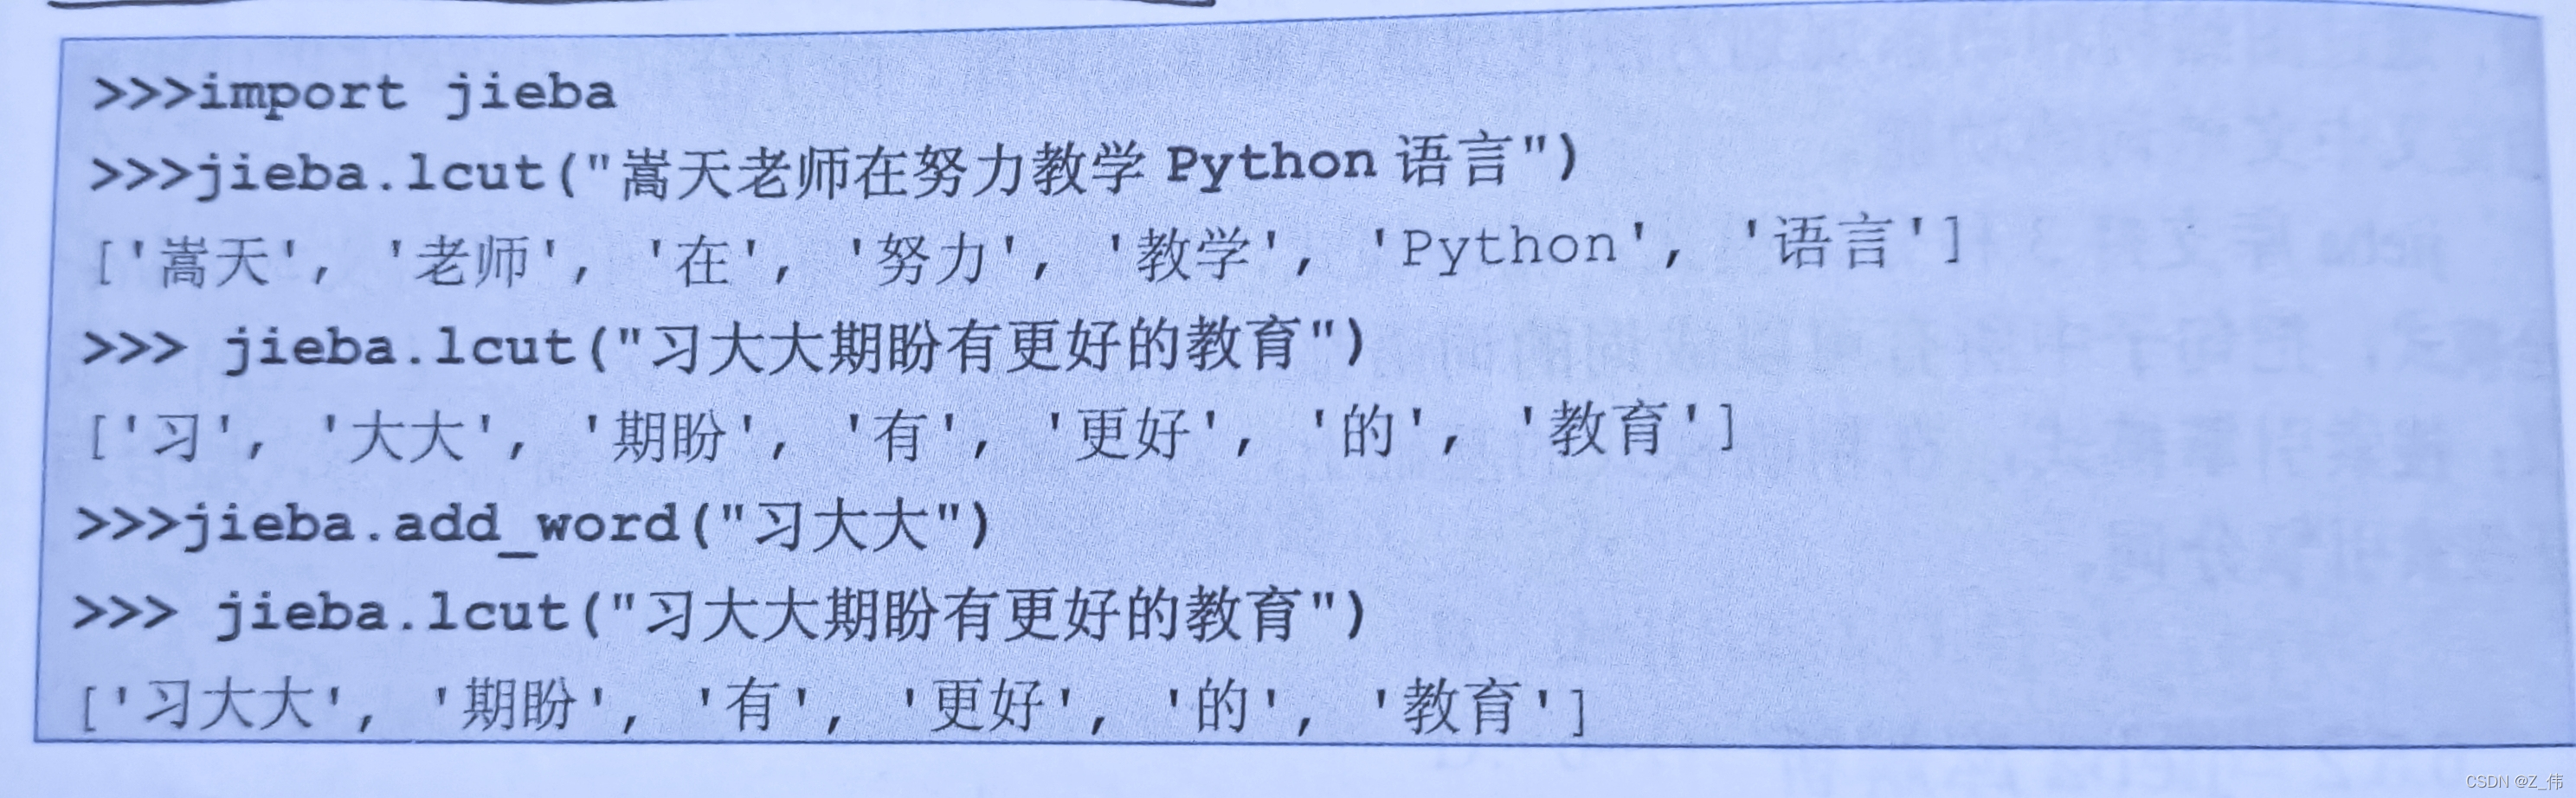 Python.jieba库